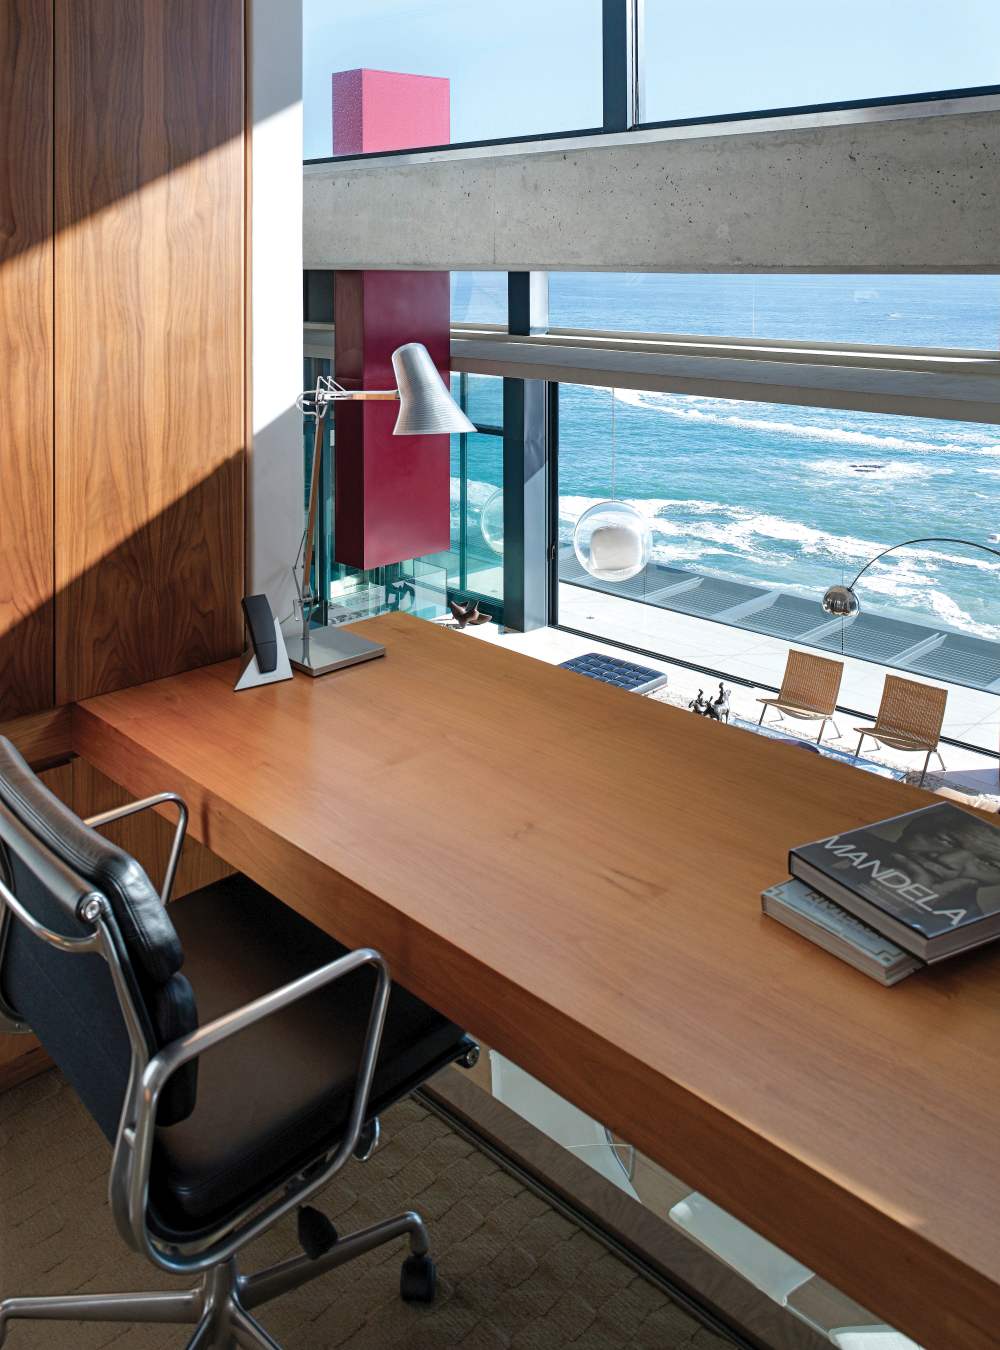 ARRCC Horizon Villa in Cape Town South Africa desk with ocean view